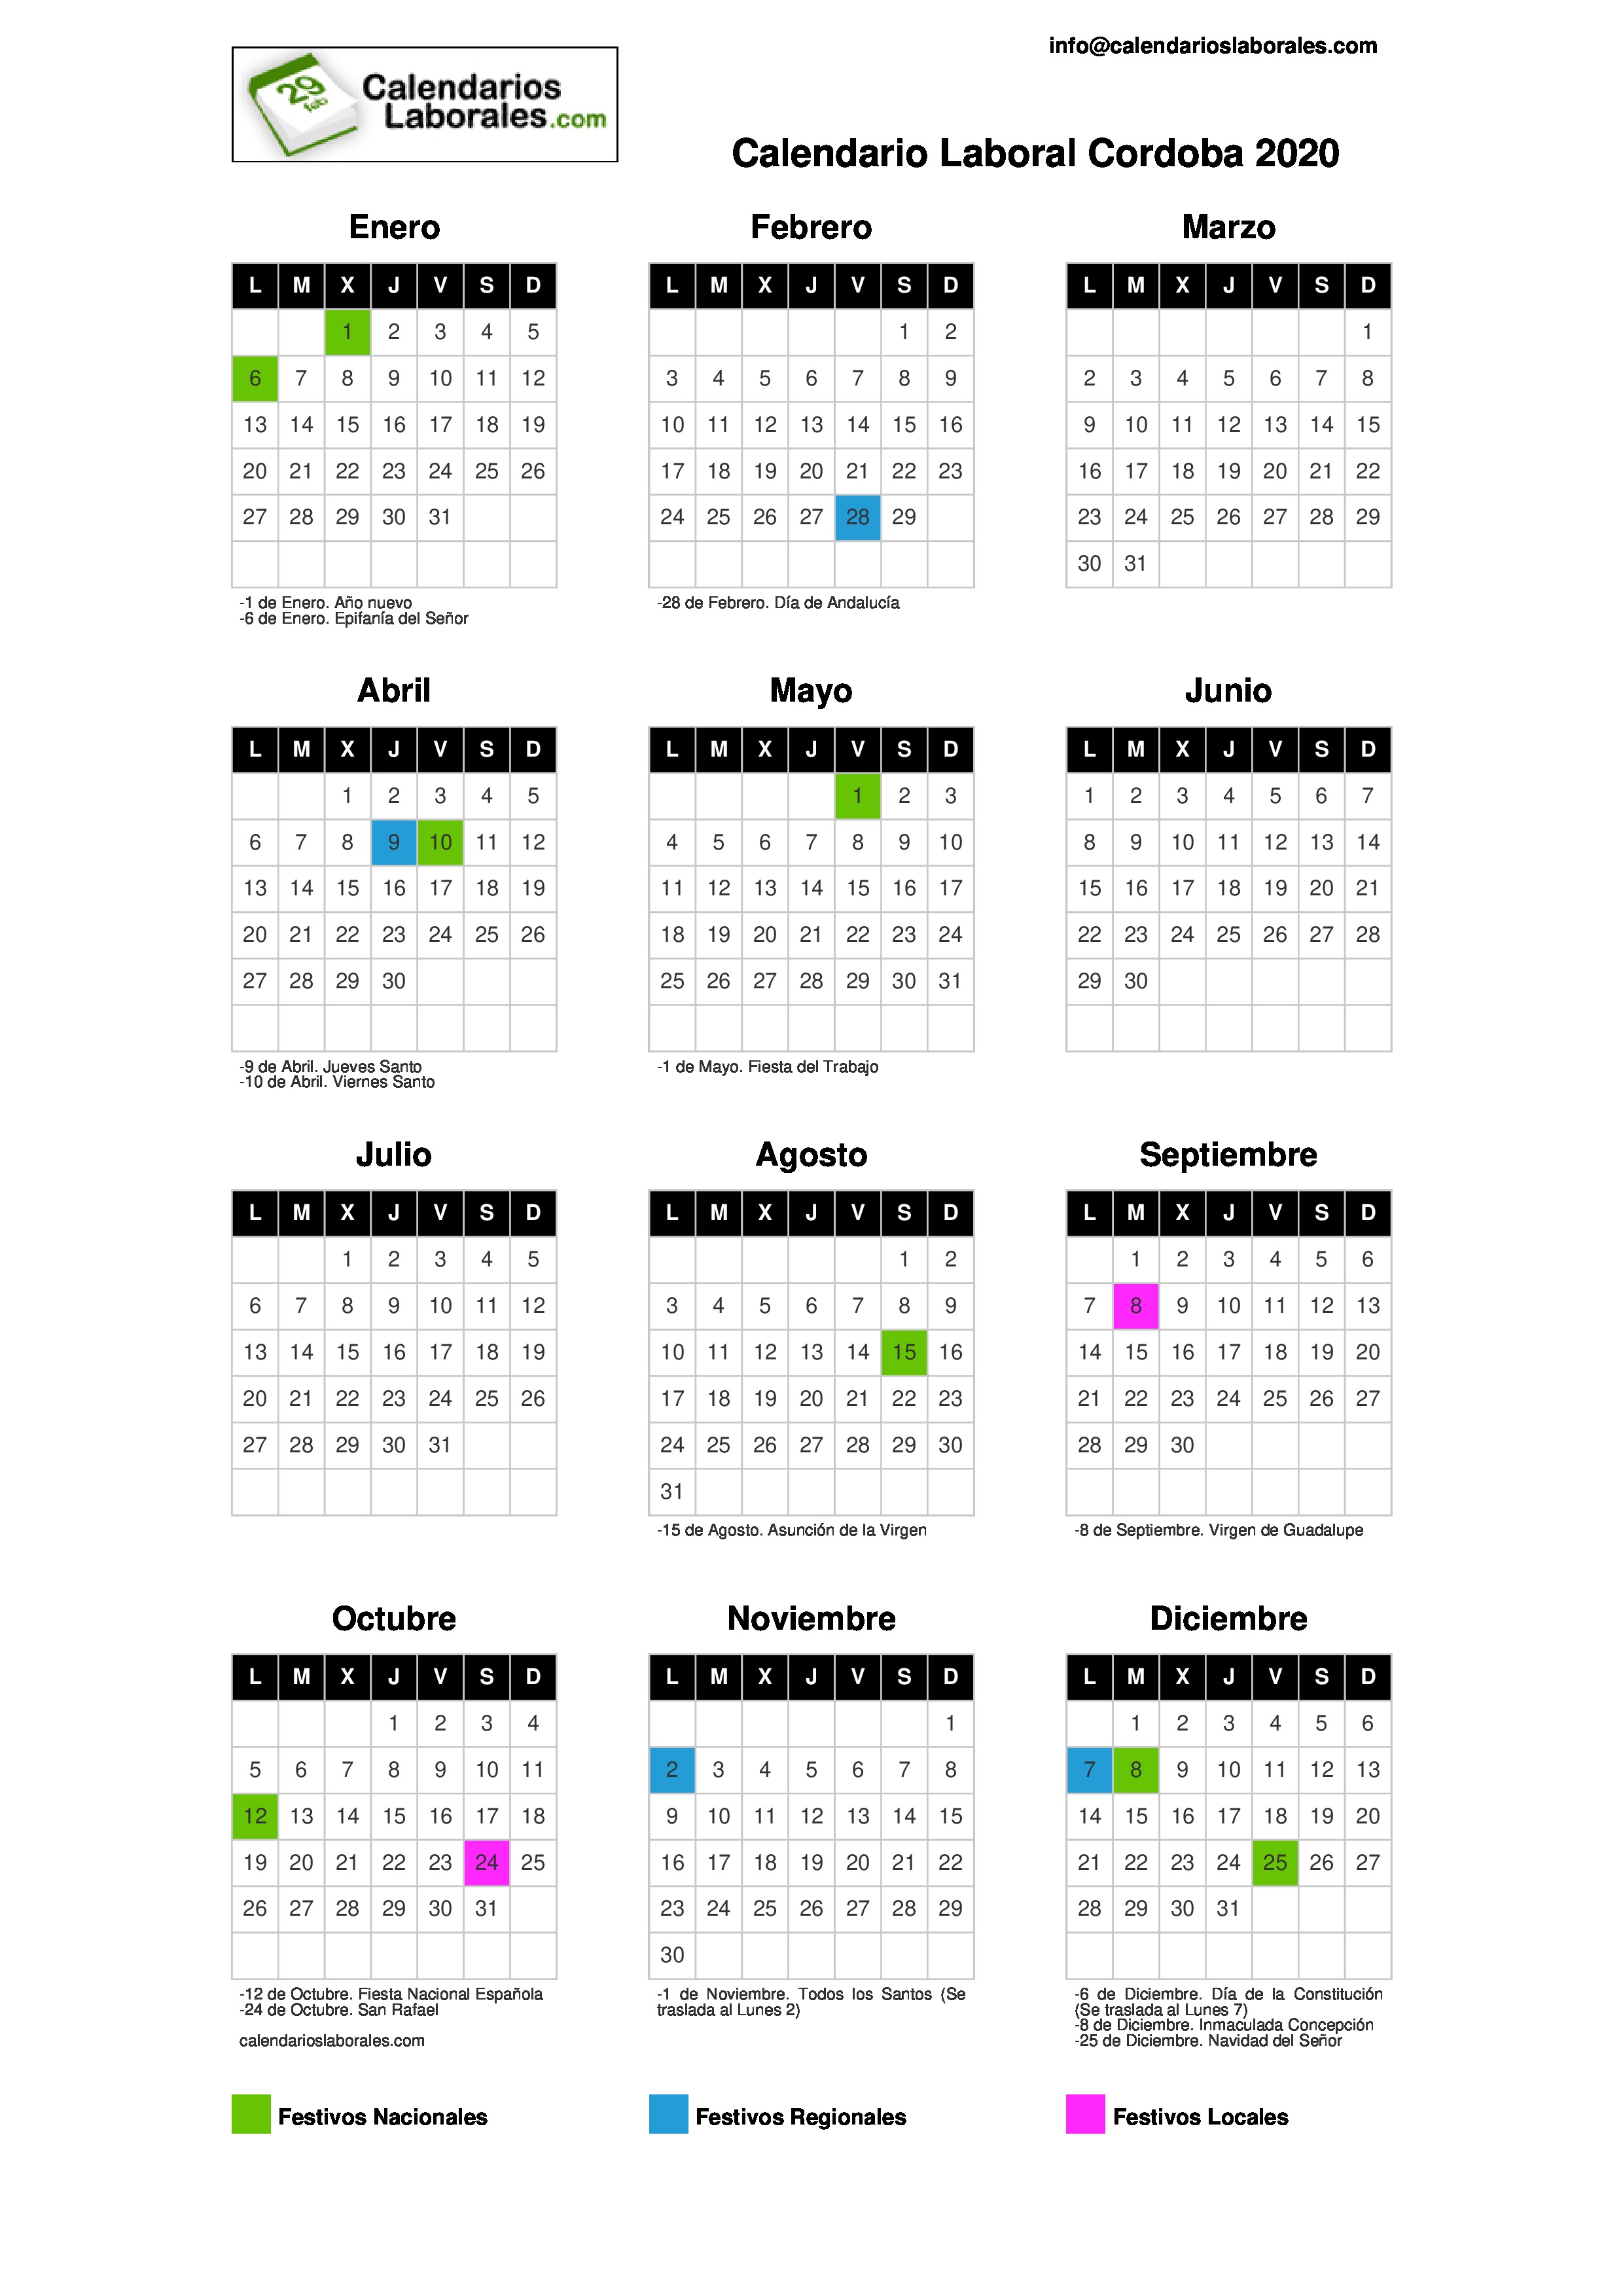 Calendario Laboral Córdoba 20202067 x 2923